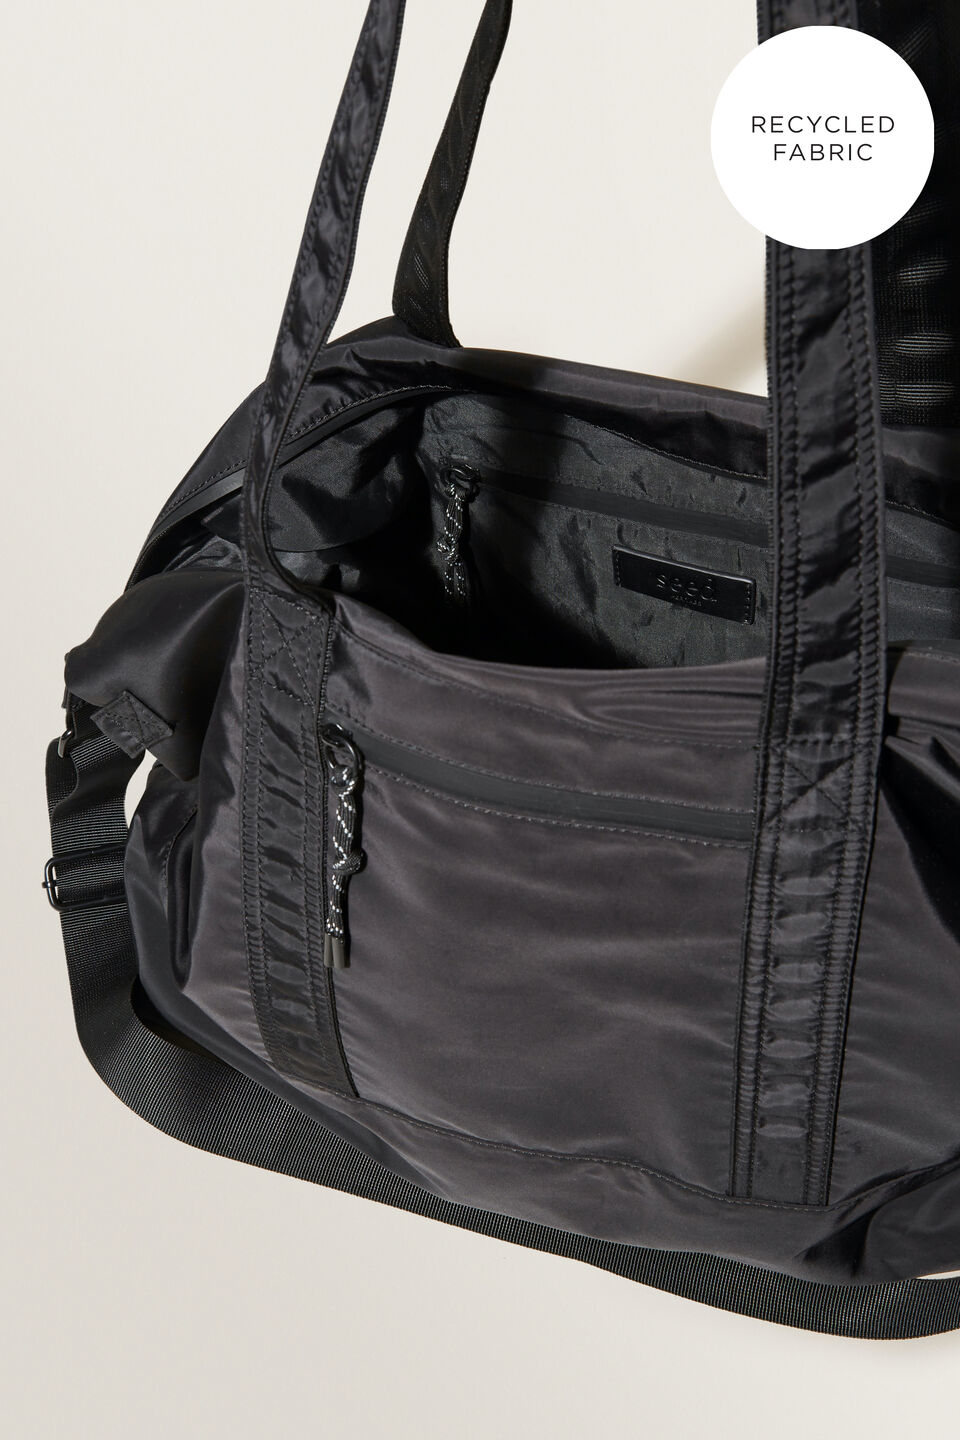 Recycled Travel Bag  Black